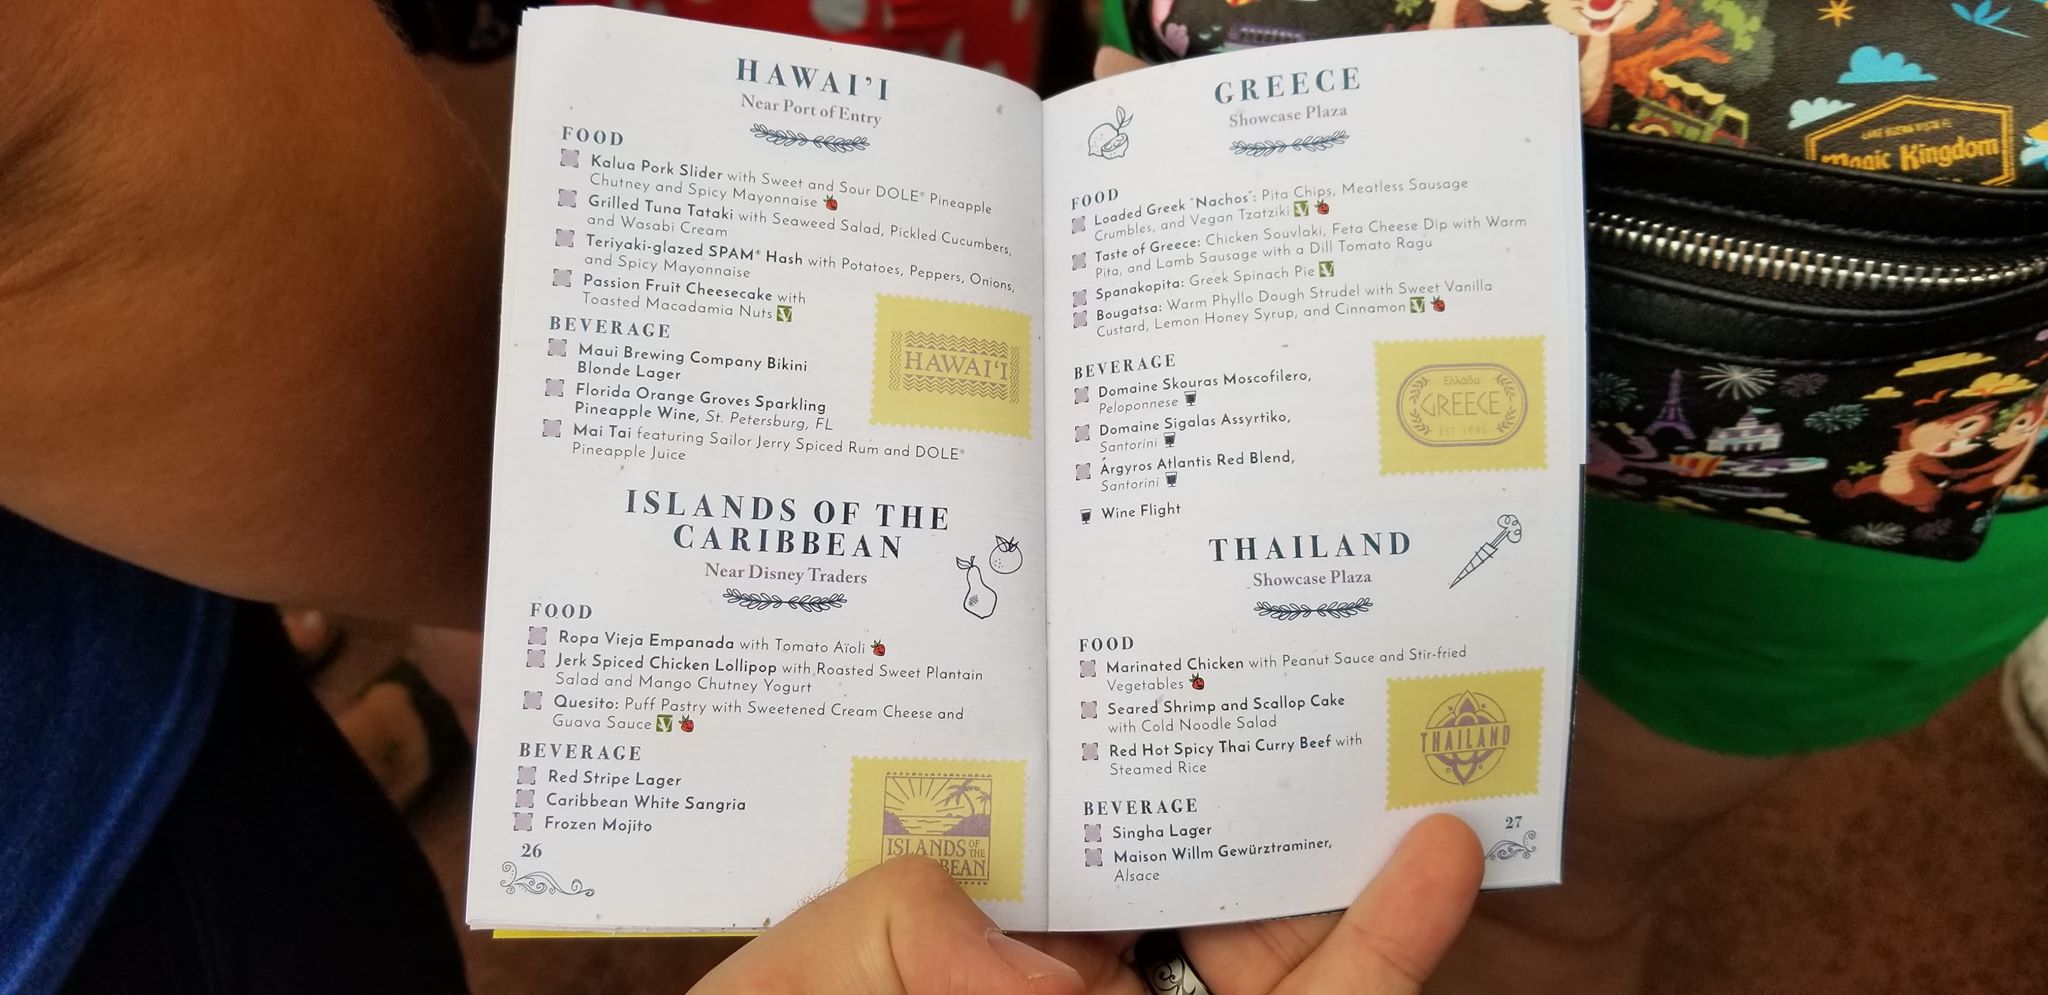 2018 Epcot International Food & Wine Passport and Map